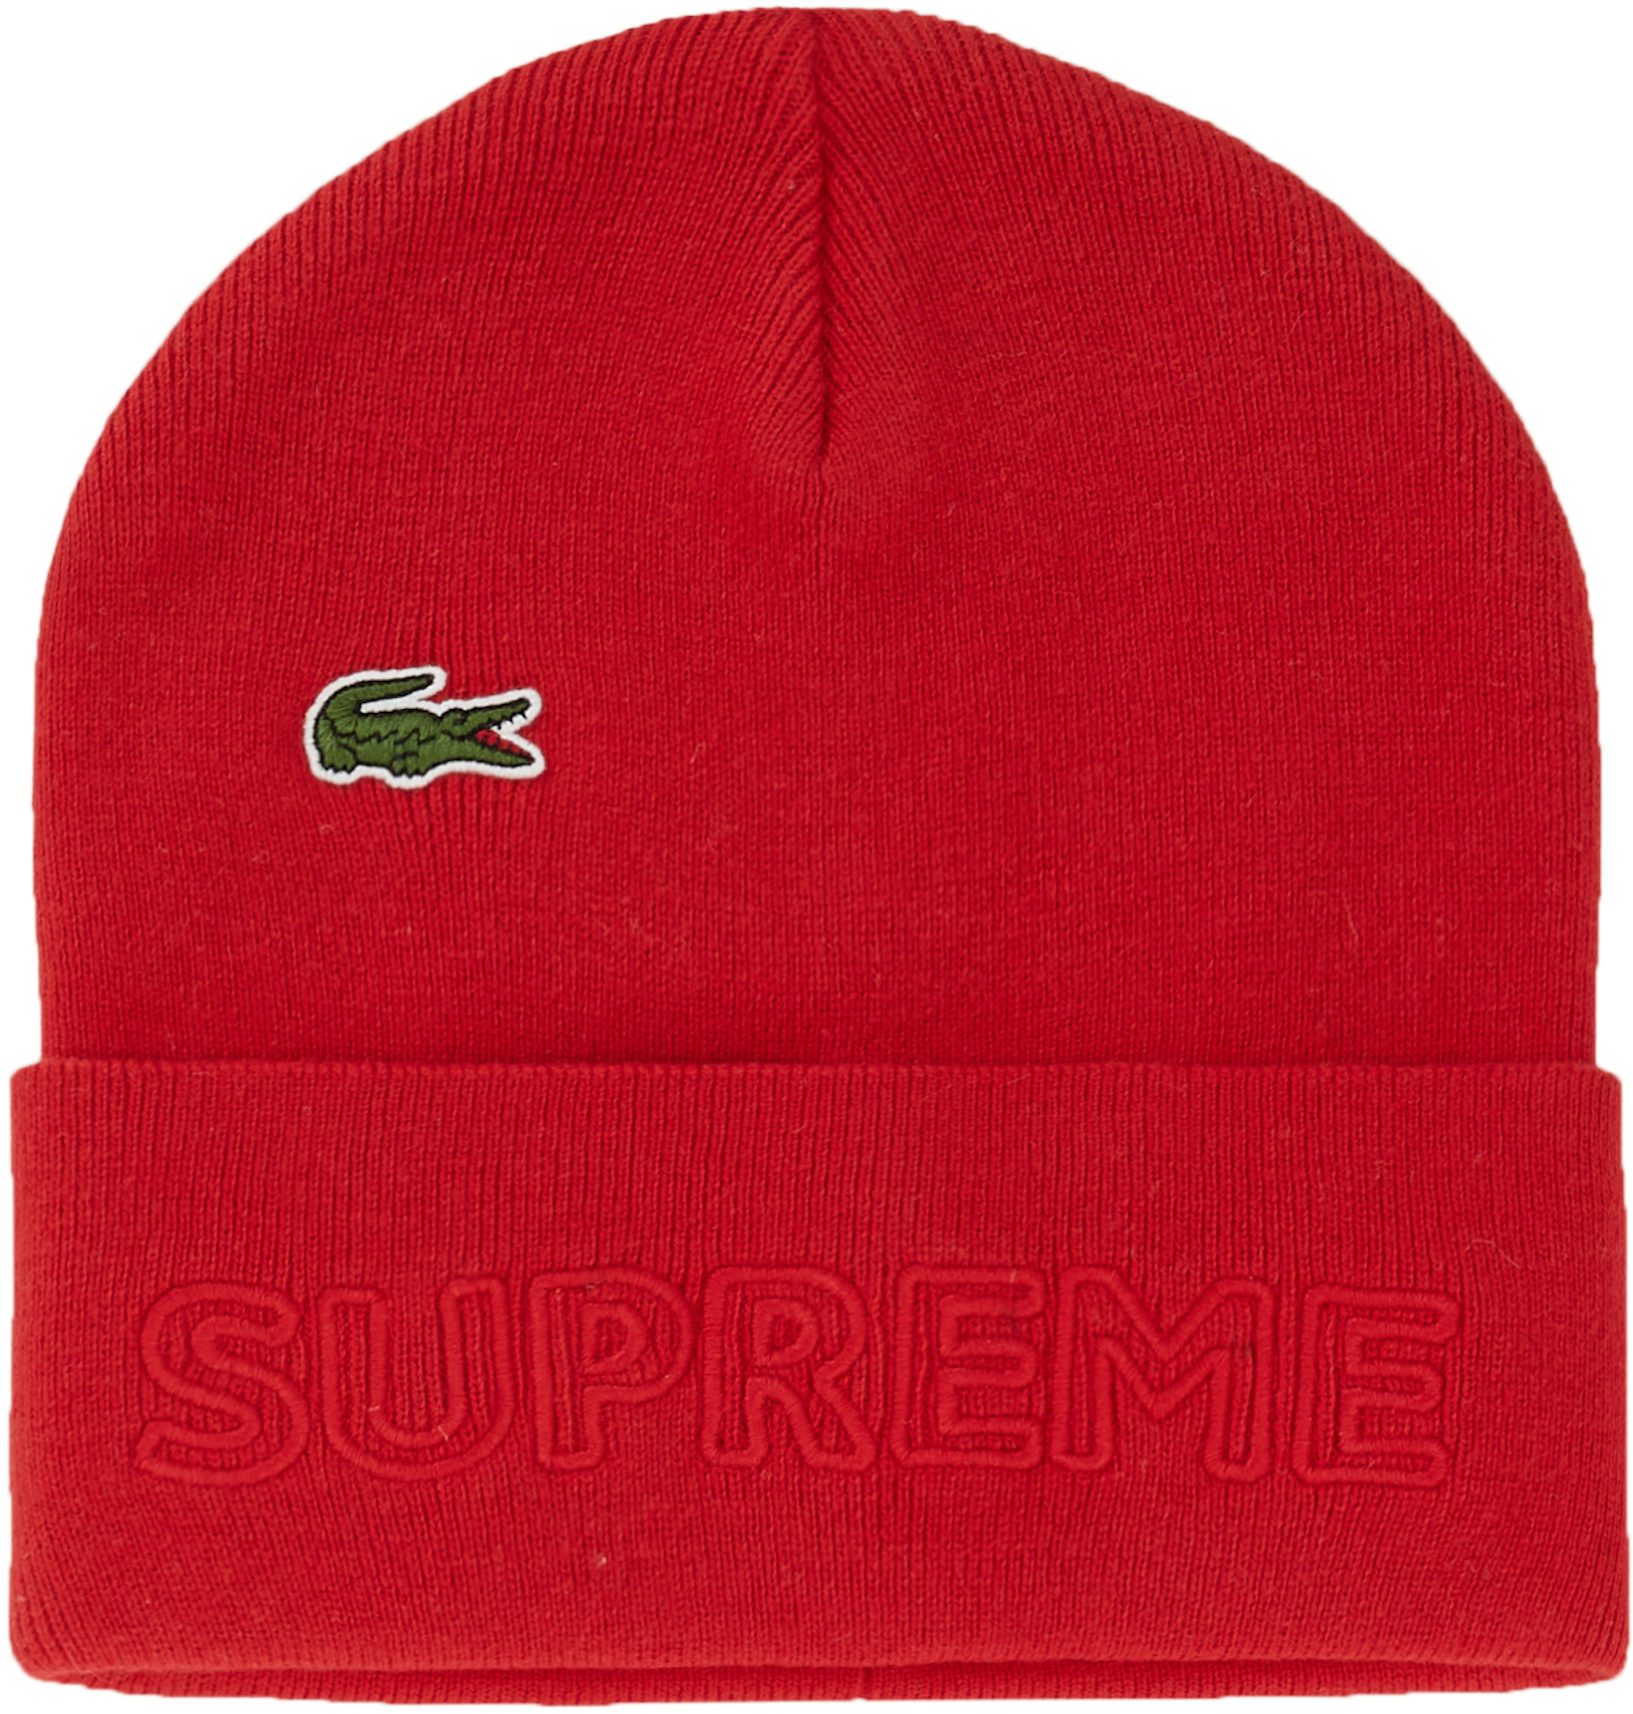 Red LV Supreme bonnet